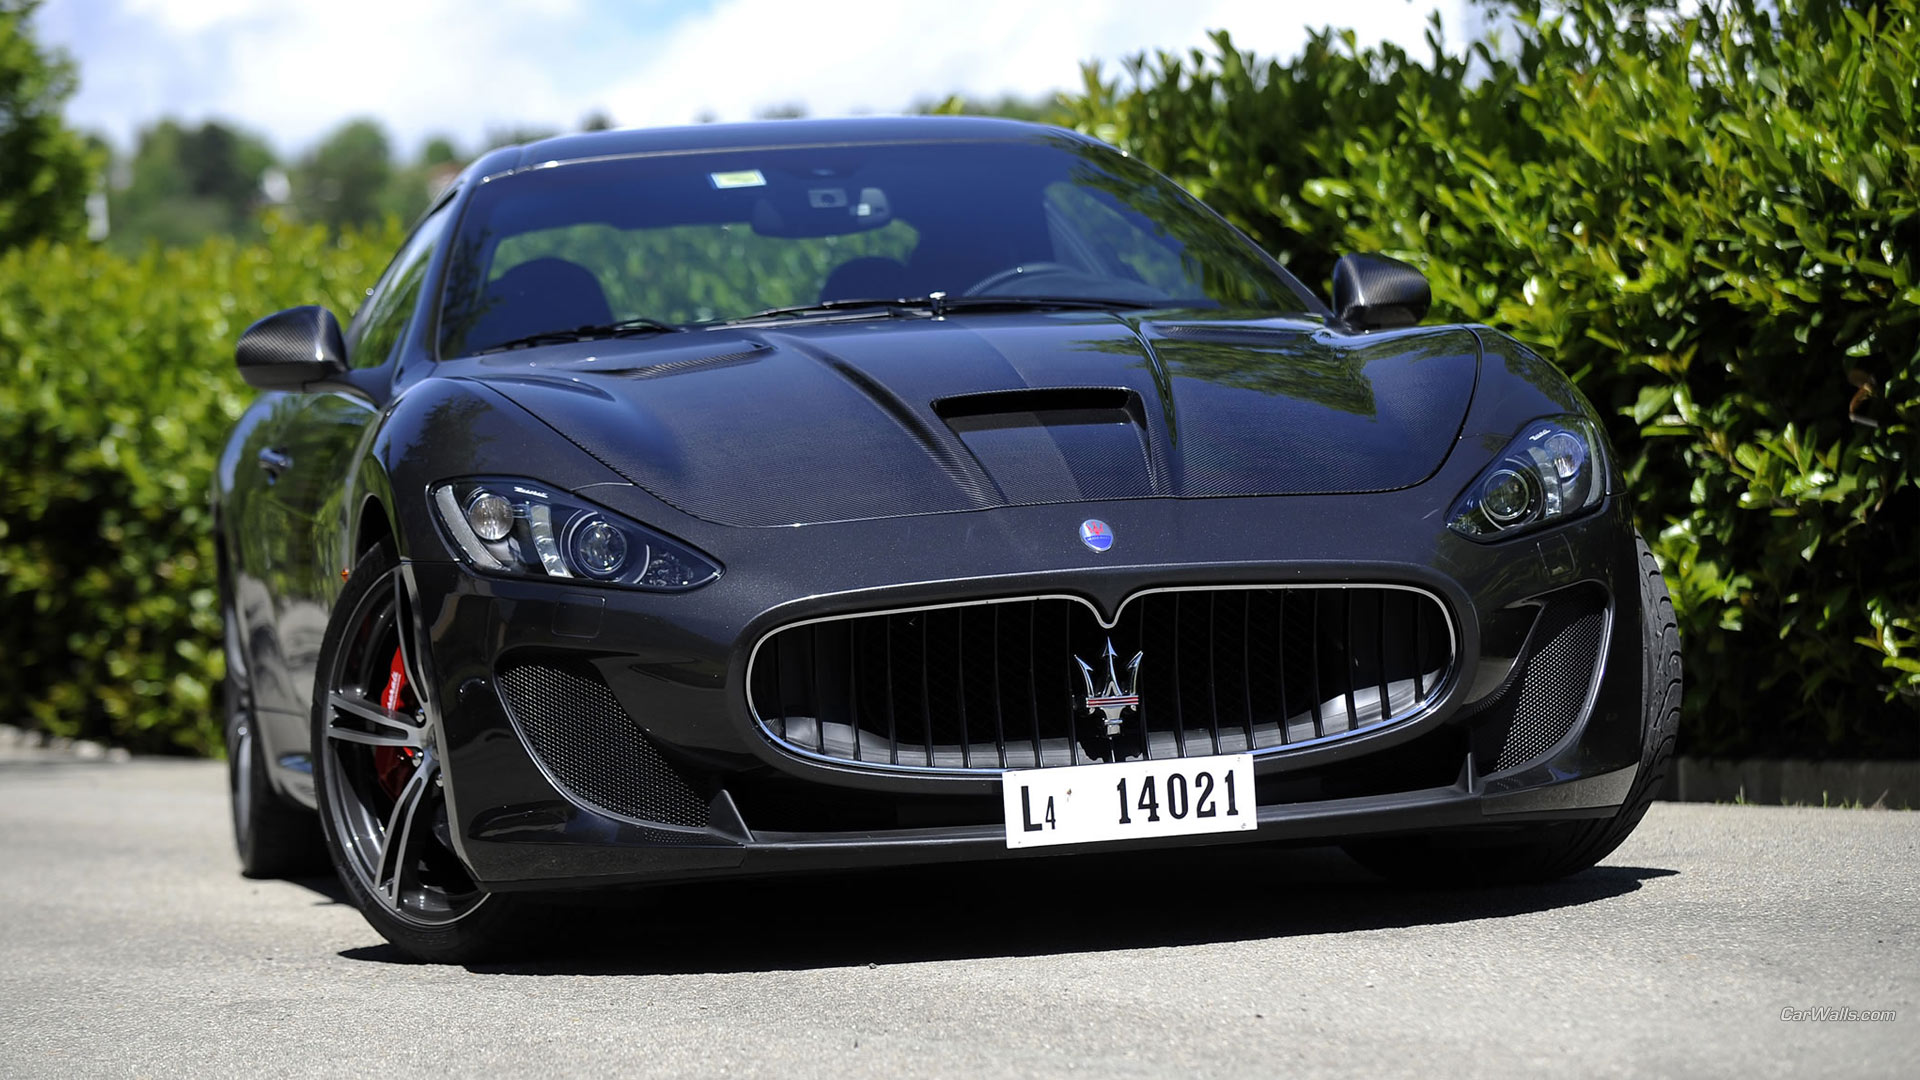 Télécharger des fonds d'écran Maserati Granturismo Mc Stradale 2014 HD